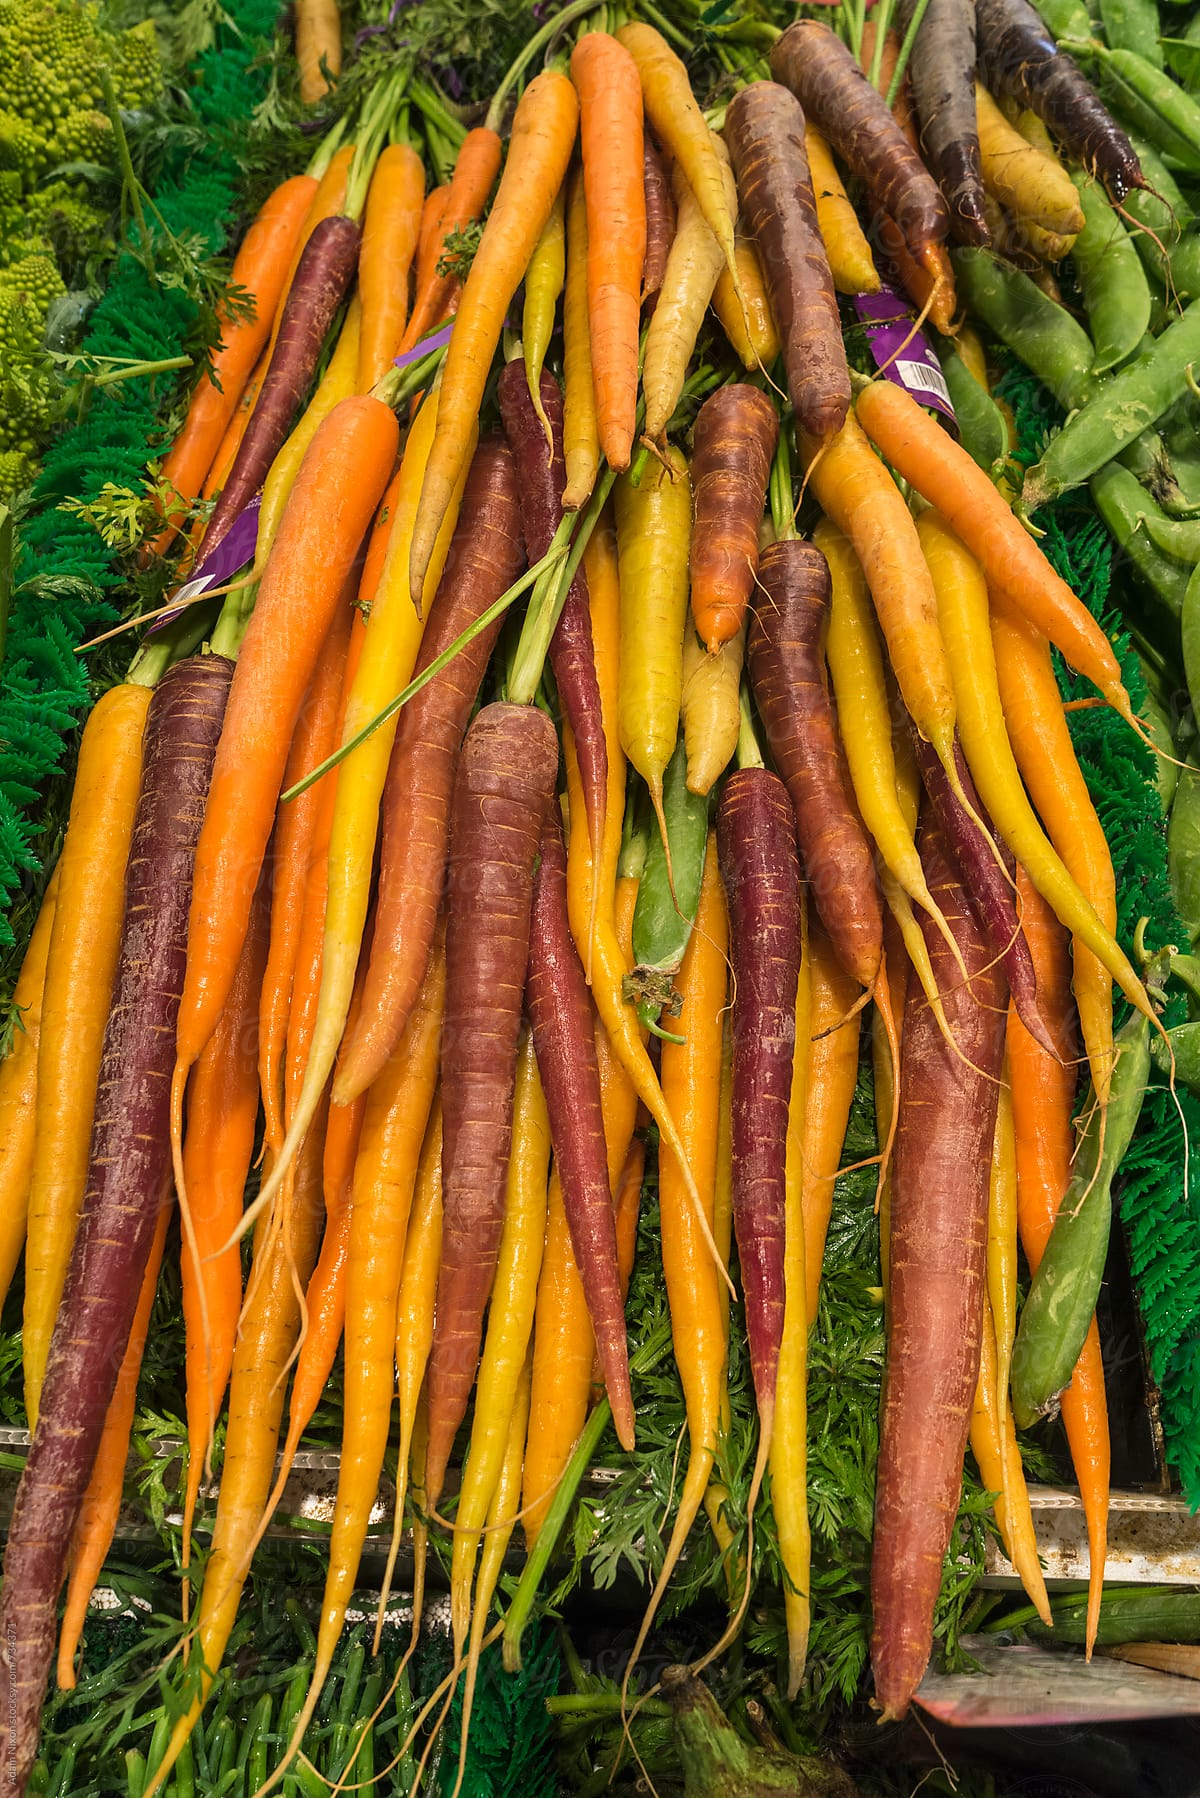 Multi colored organic carrots at a farmers market